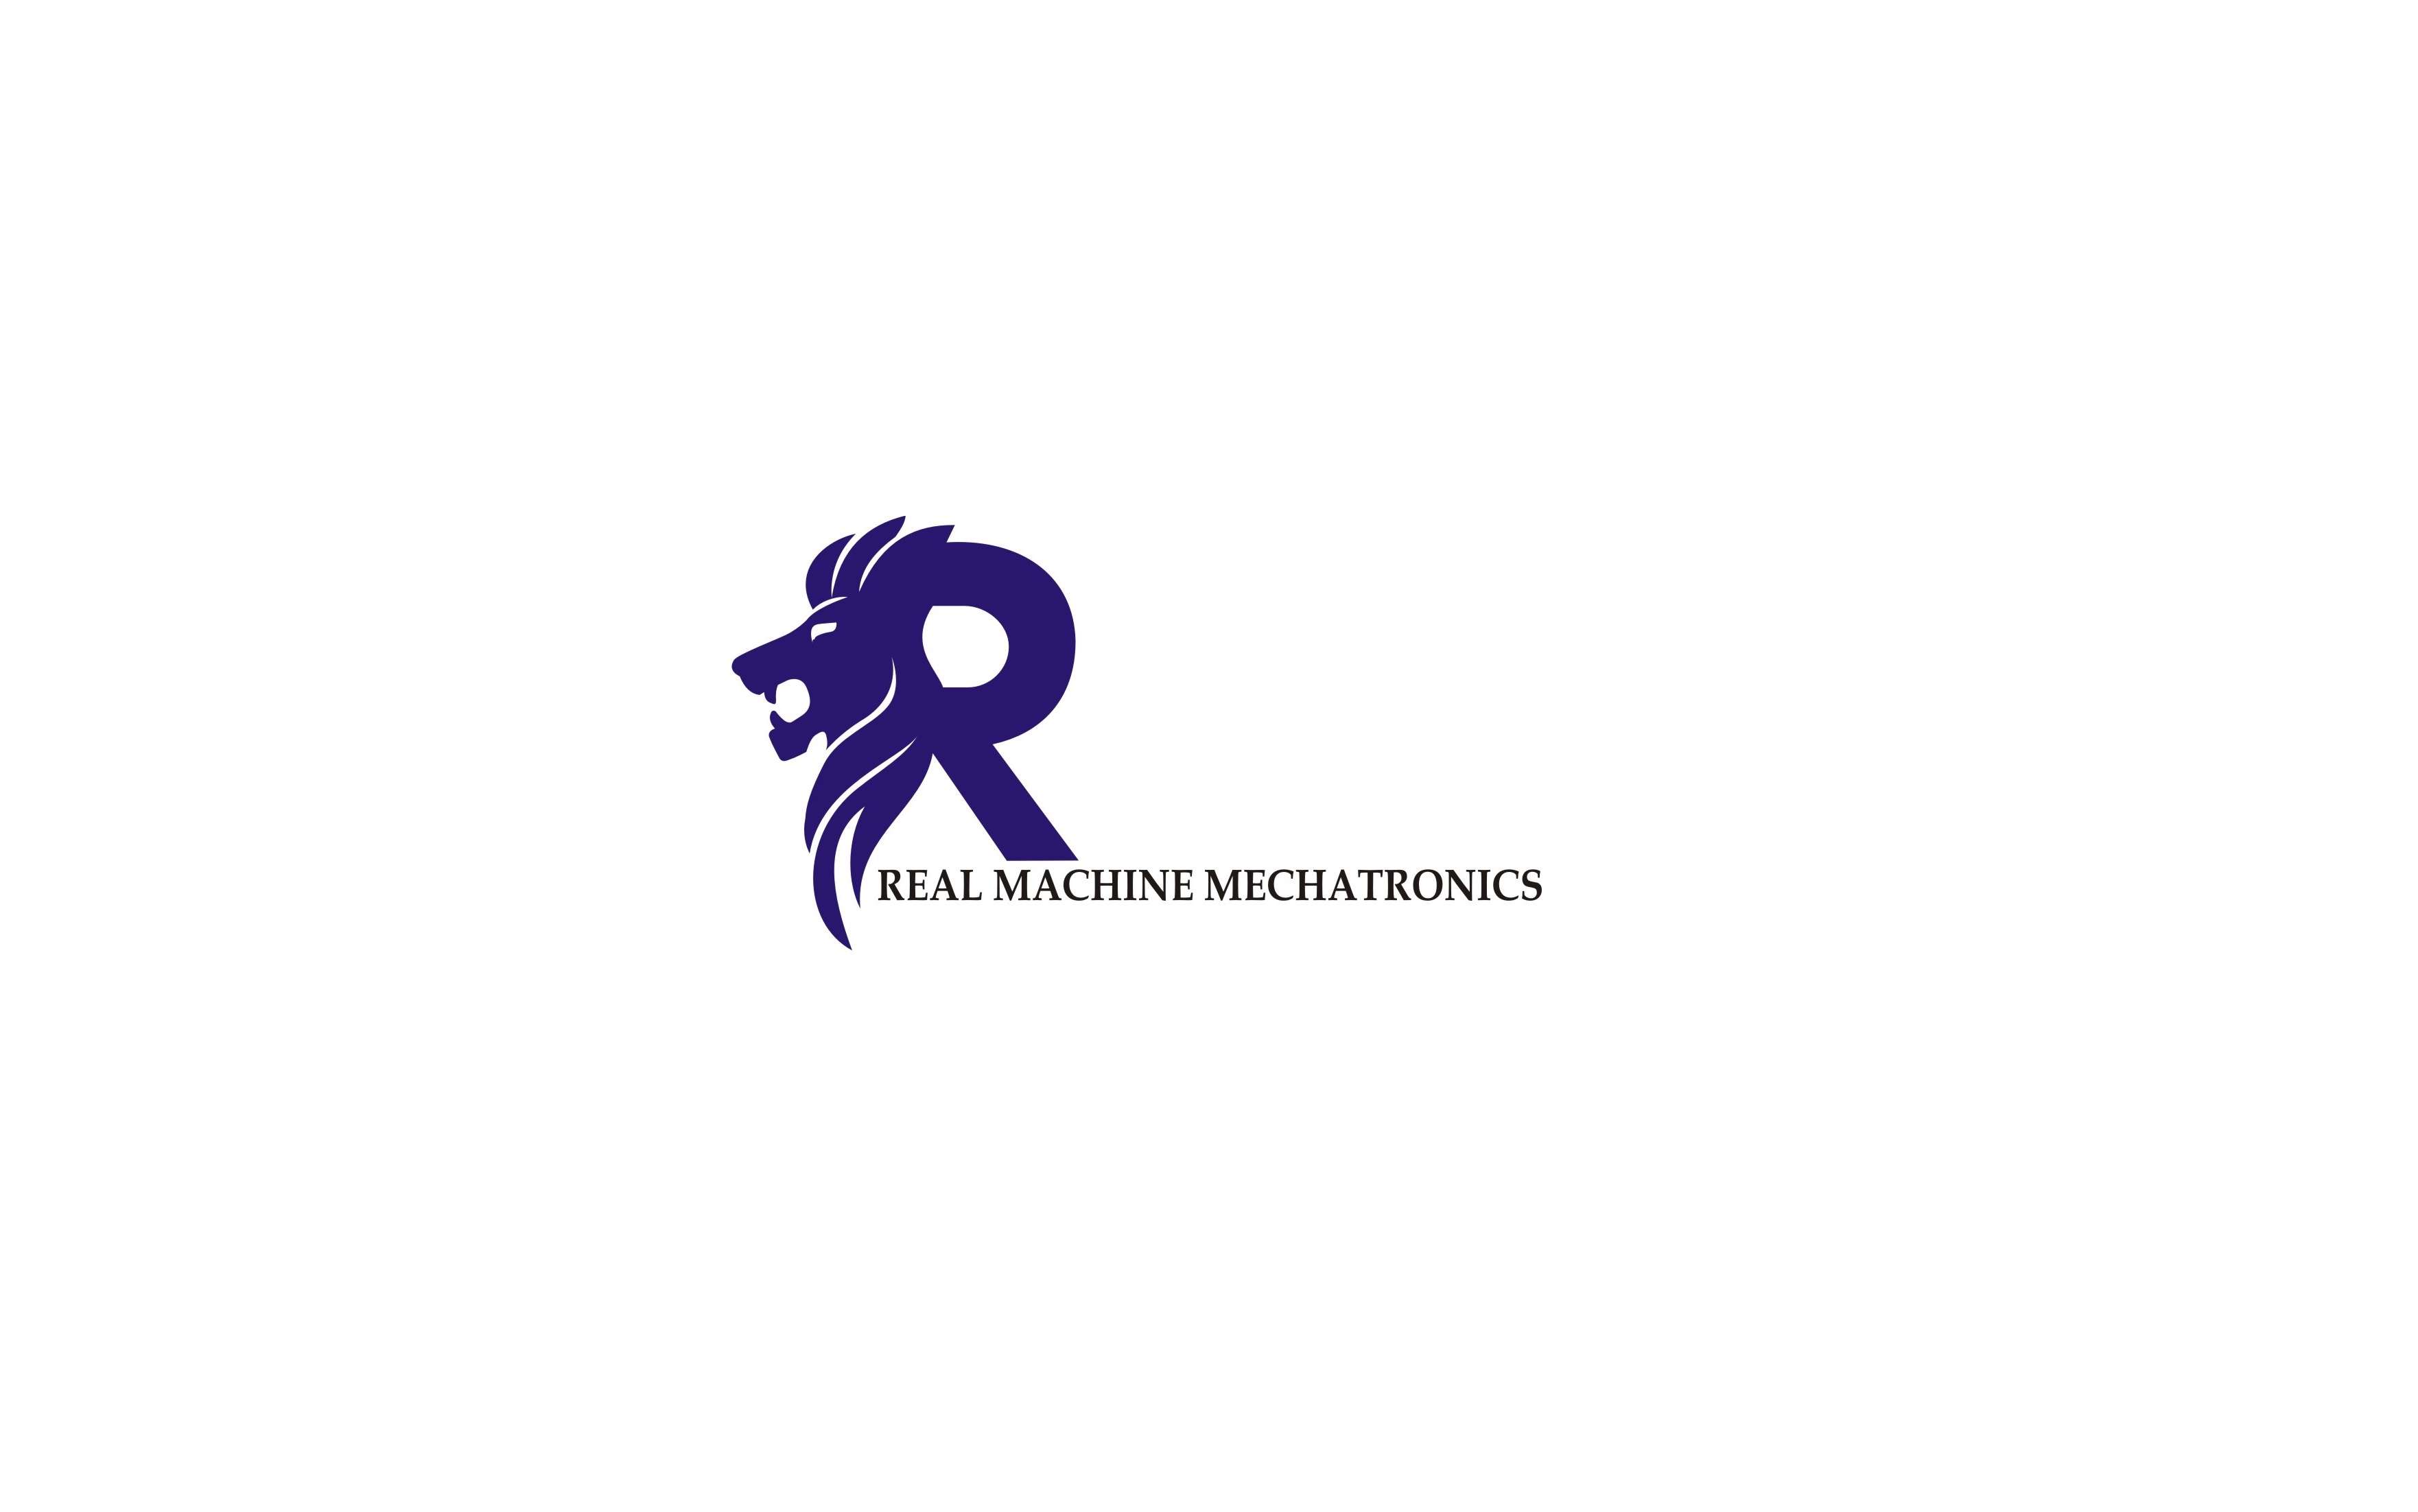 Real Machine Mechatronics